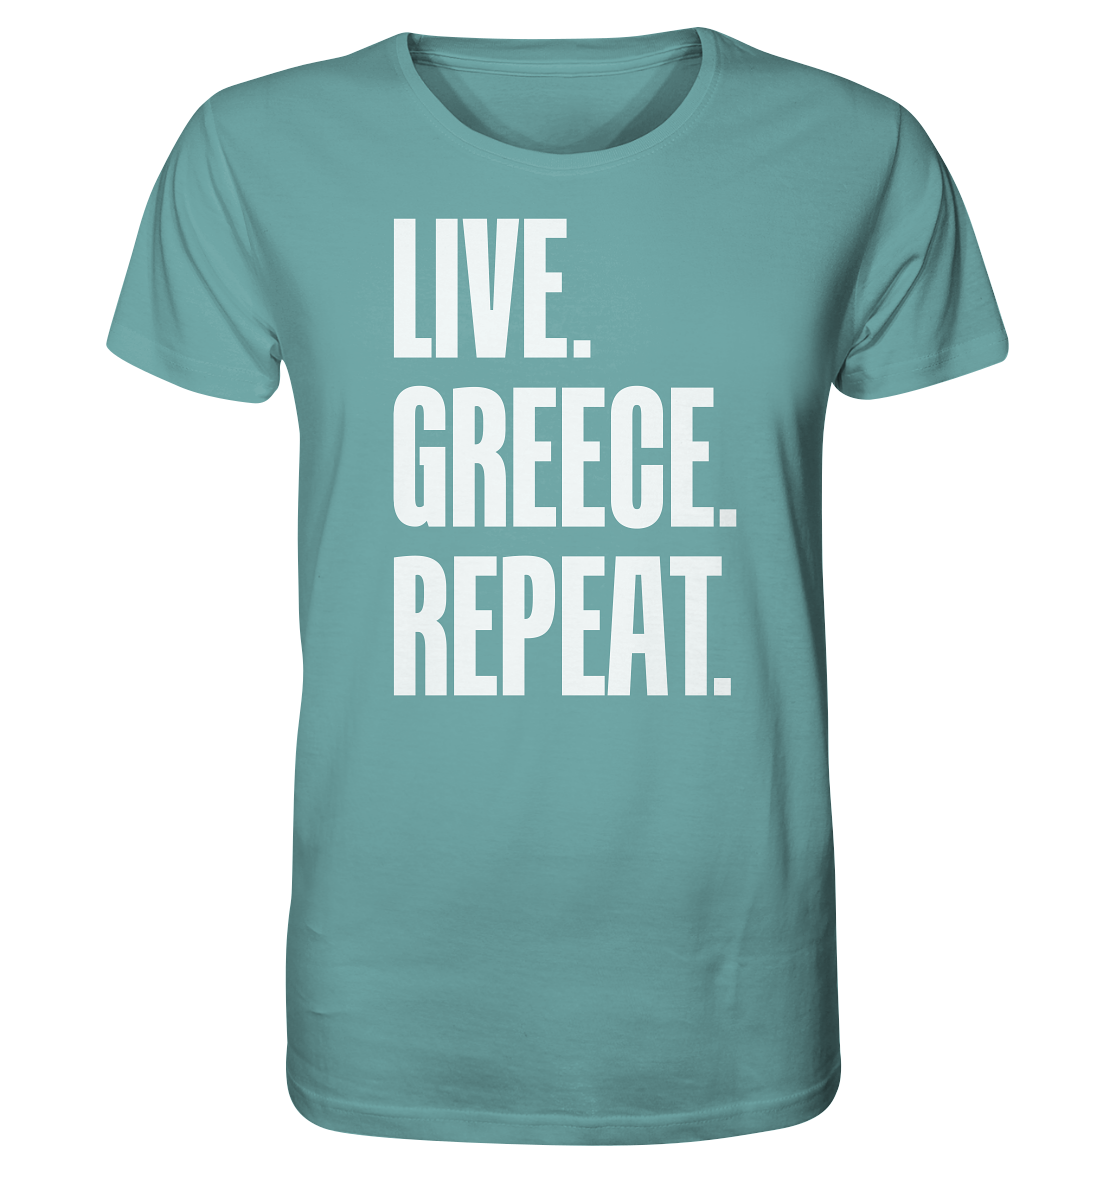 LIVE. GREECE. REPEAT. -Organic shirt